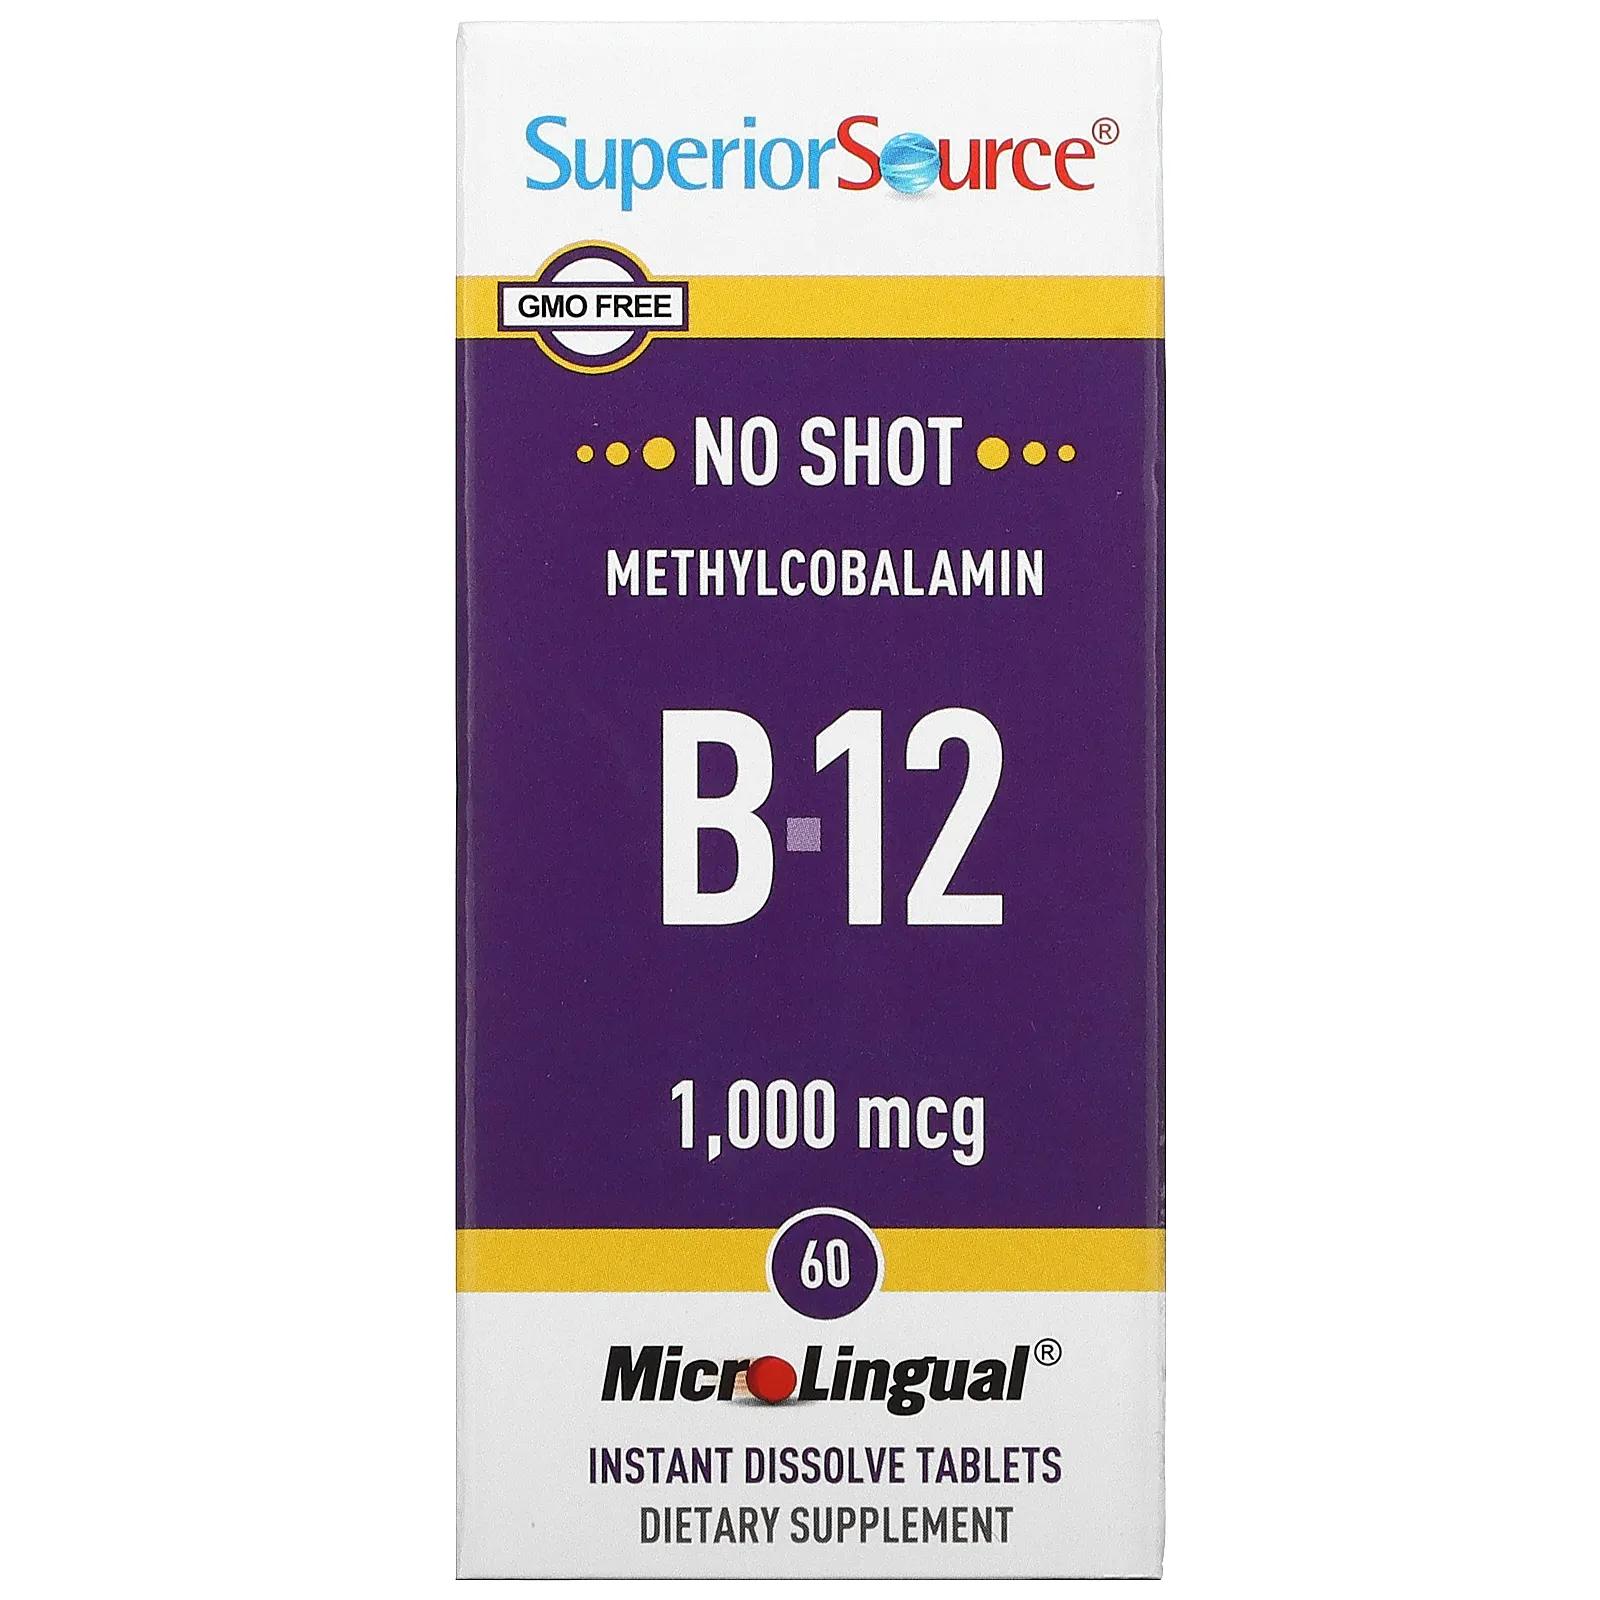 Superior Source Methylcobalamin B-12 1000 mcg 60 MicroLingual Instant Dissolve Tablets витамин c superior source clean melts апельсин 90 растворов